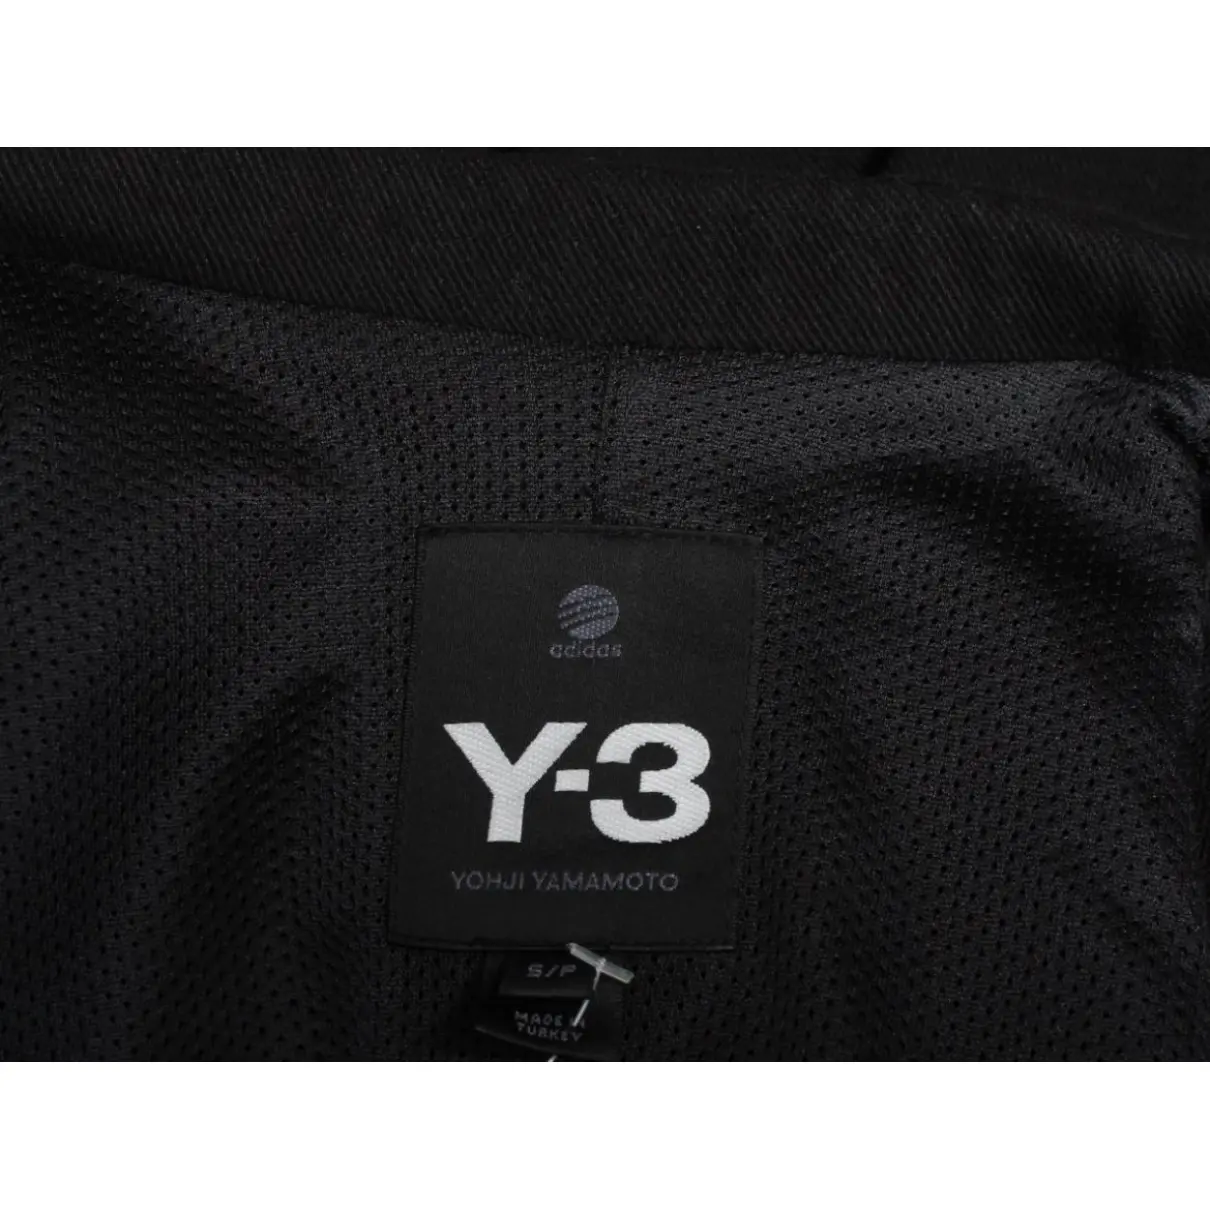 Buy Y-3 by Yohji Yamamoto Vest online